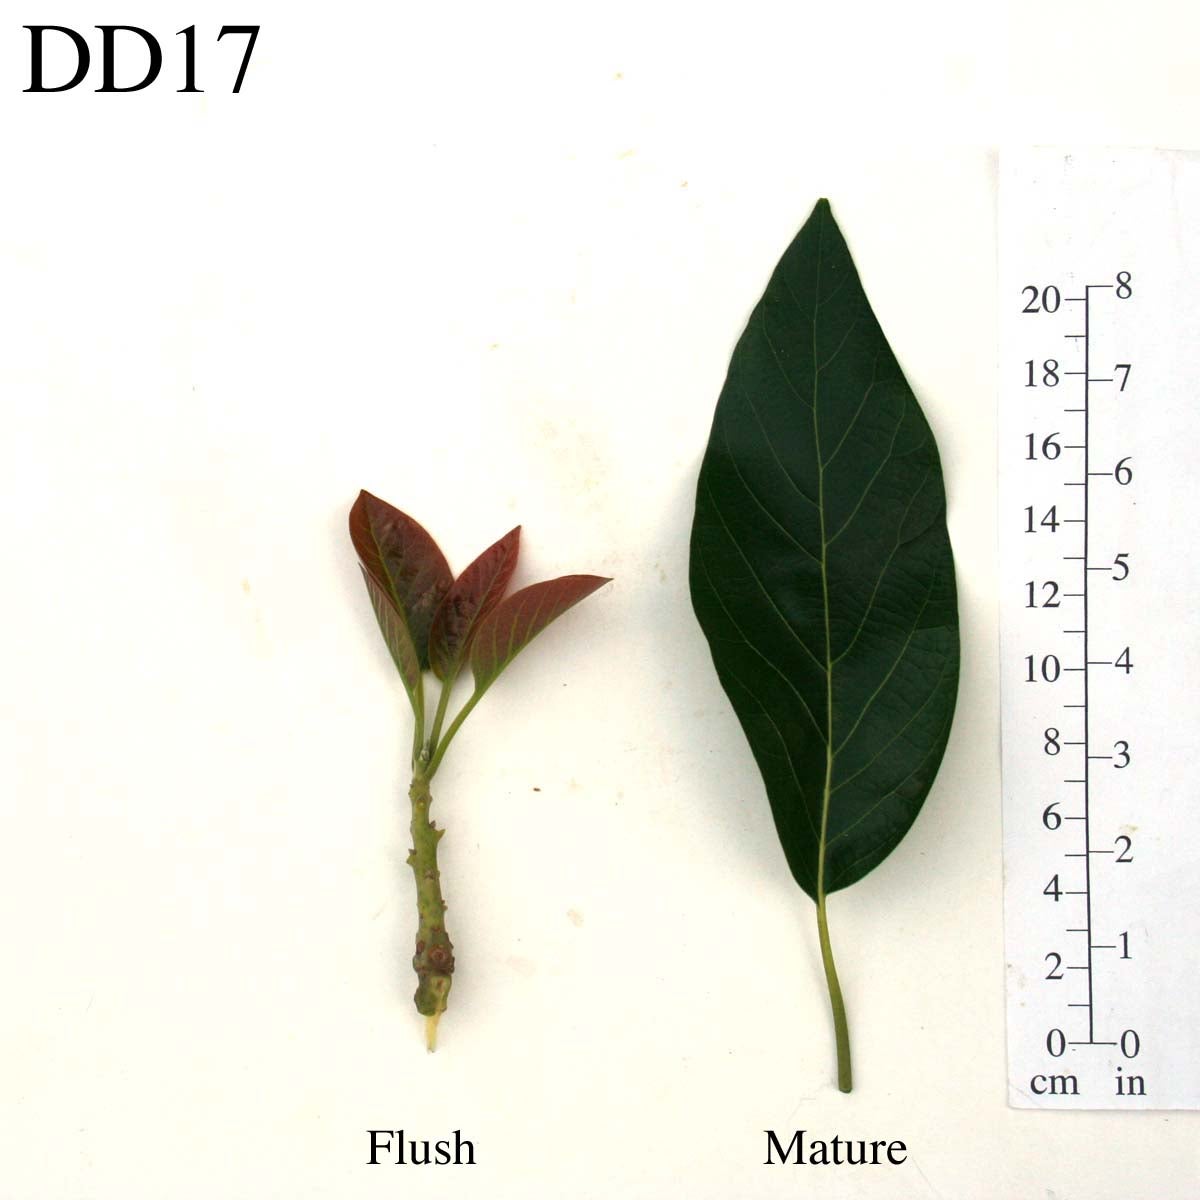 DD17 Leaves